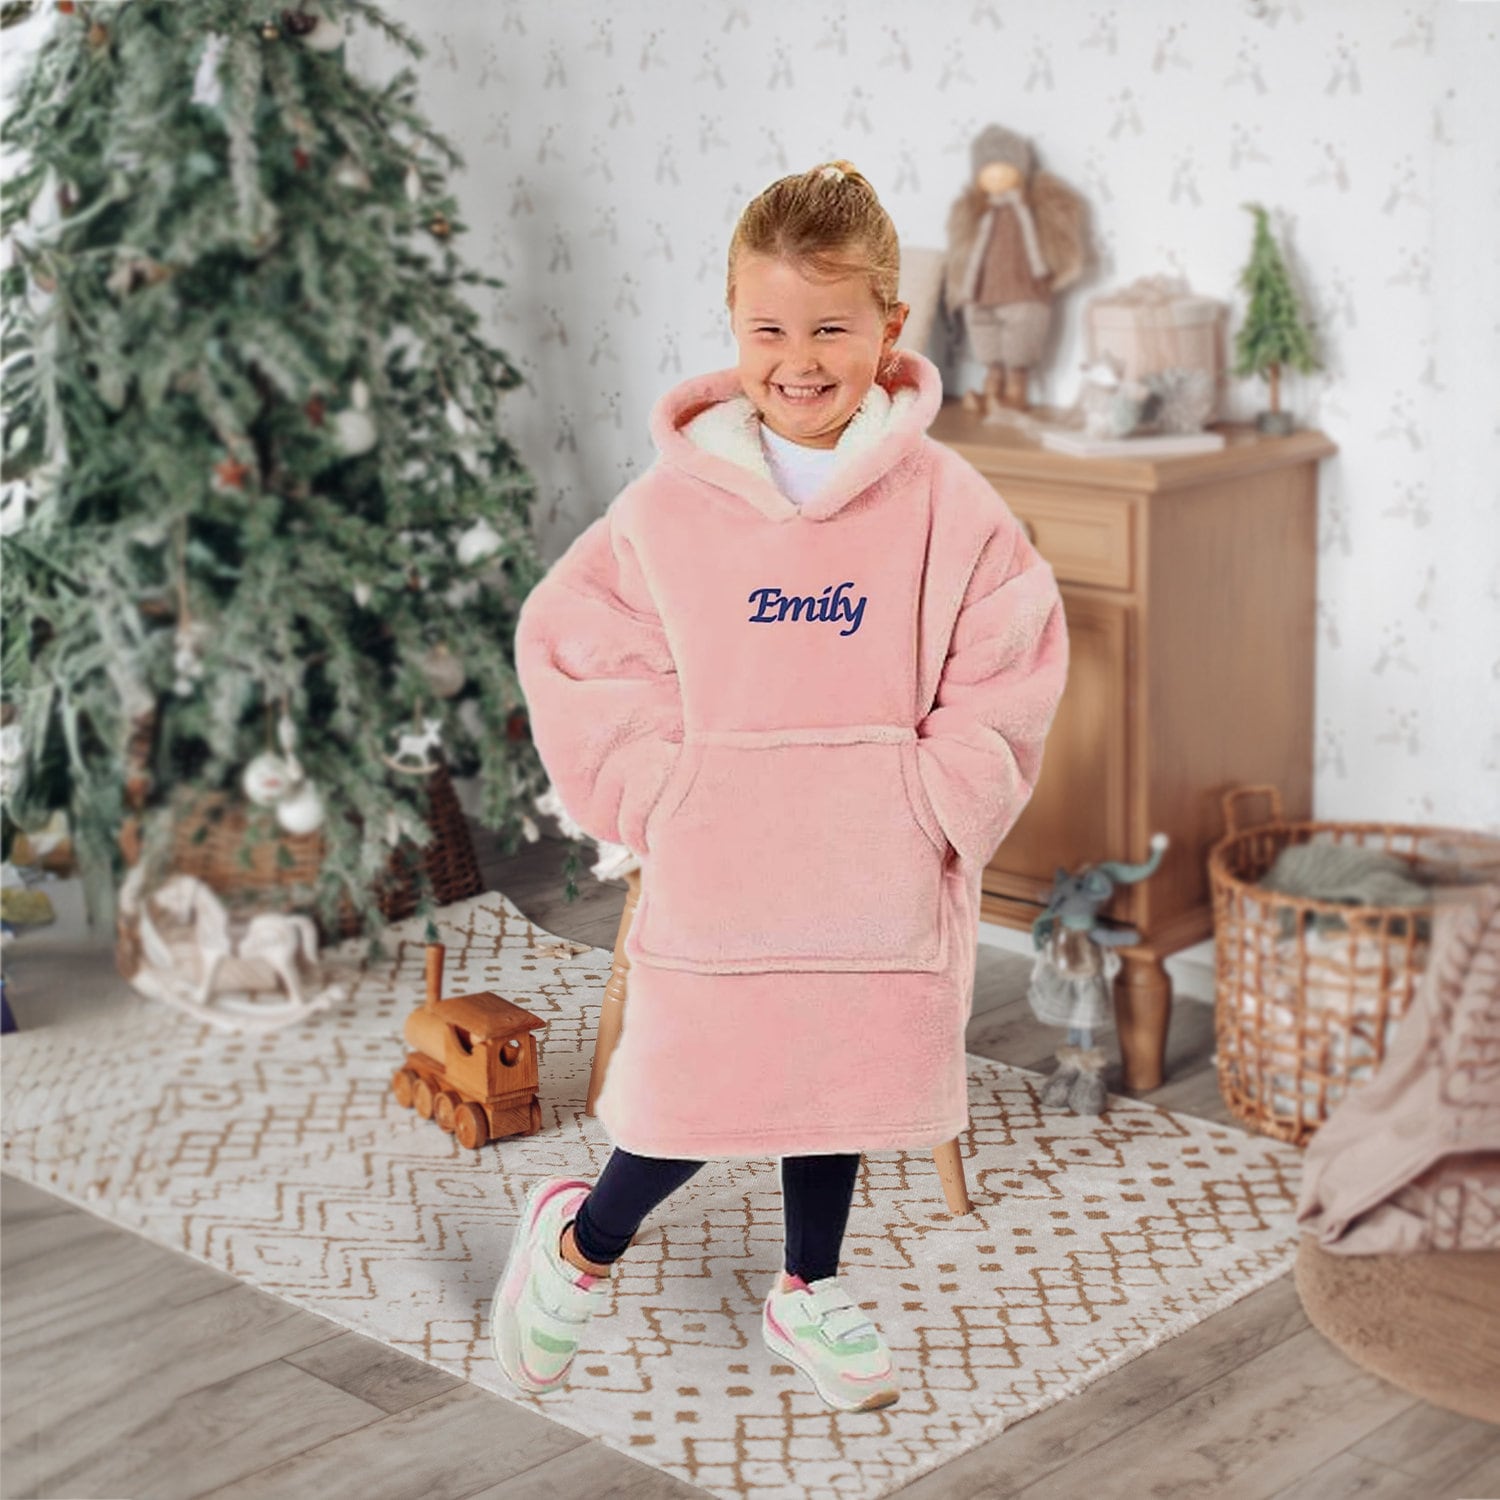 Personalised Birthday Pyjamas for Baby & Toddler Girls - Pink Jungle Animal  Party PJs, Ages 6 Months to 4 Years - Custom Age Reveal Sleepwear - Hoolaroo